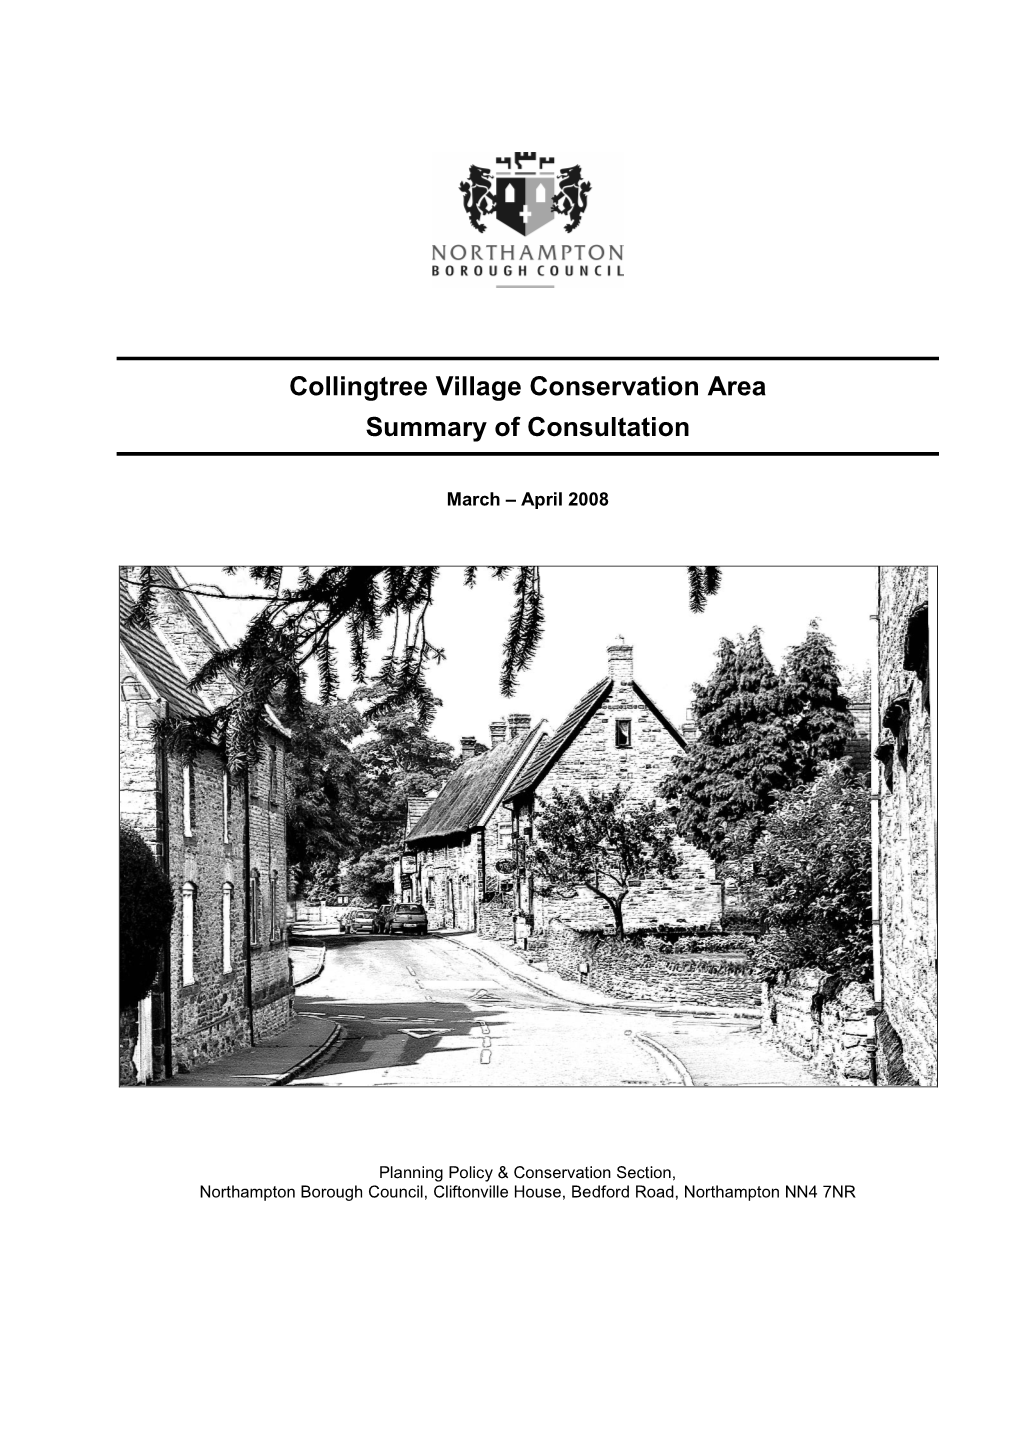 Collingtree Village Conservation Area Summary of Consultation